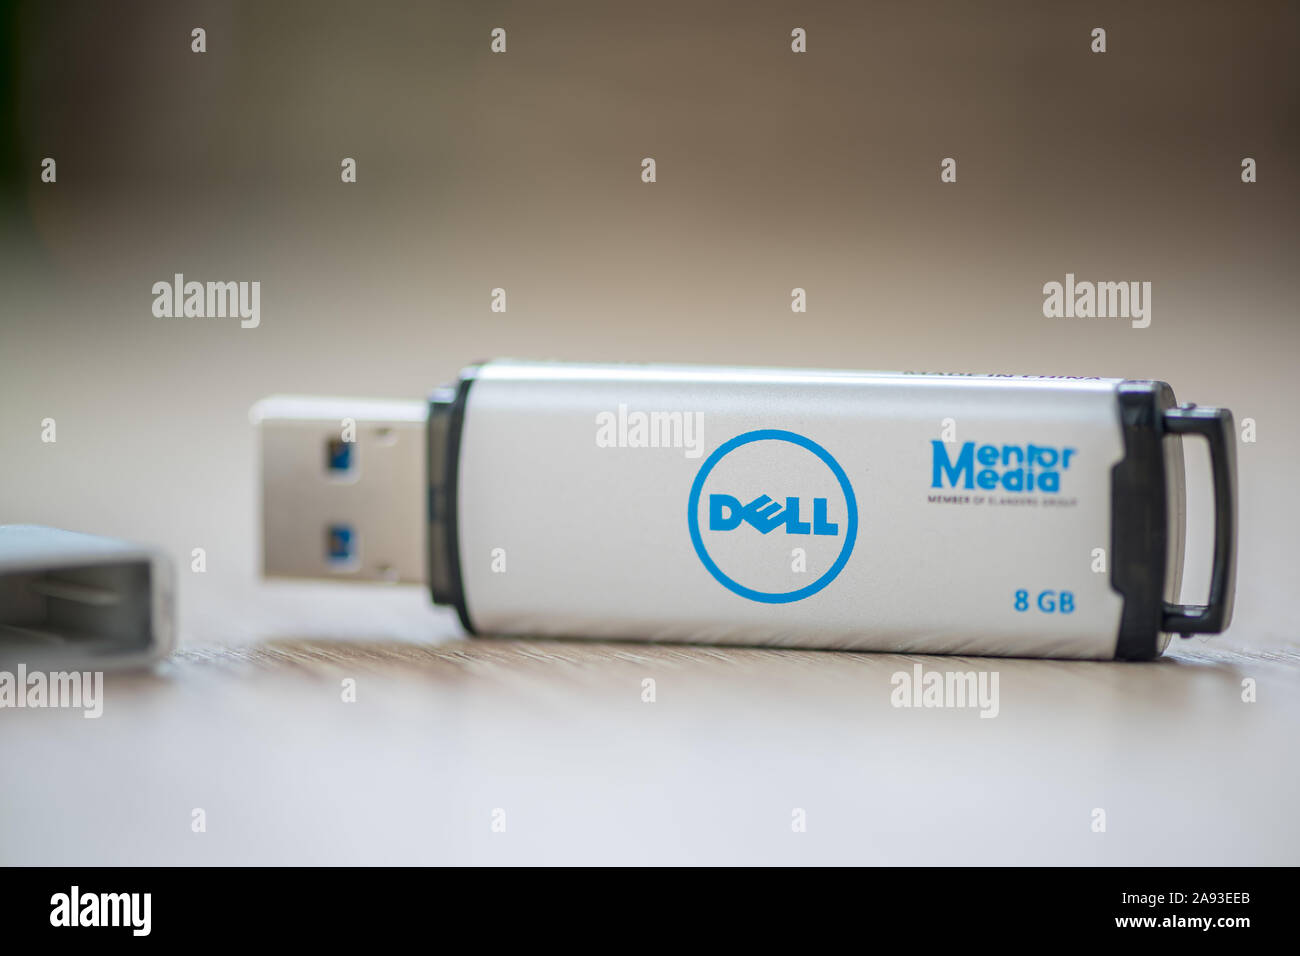 TIMISOARA, ROMANIA - JANUARY 12, 2019: Close-up of a Dell Mentor Media USB  stick, flash pen, 8 GB Stock Photo - Alamy